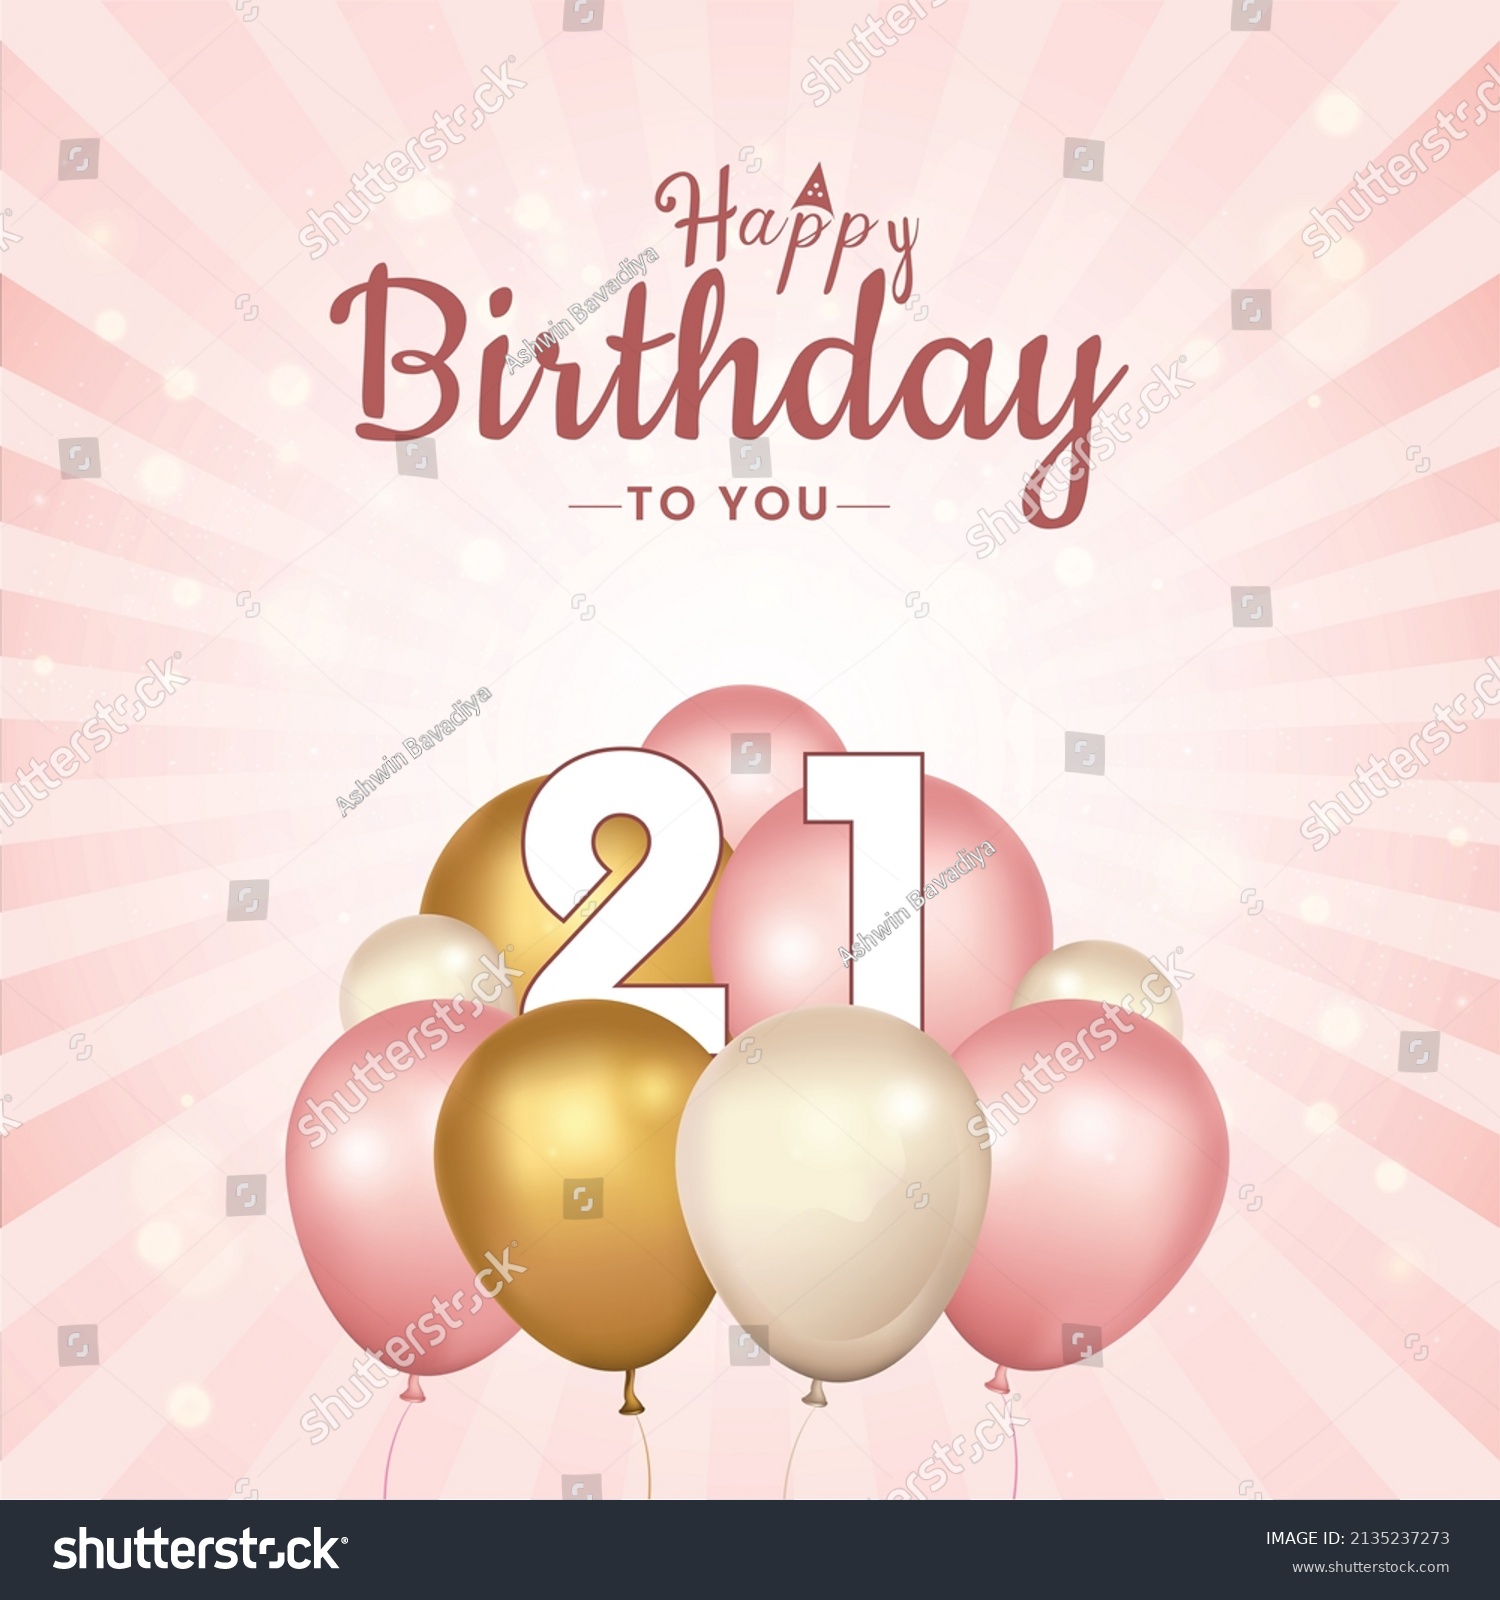 SVG of Happy  21st  birthday, greeting card, vector illustration design.
 svg